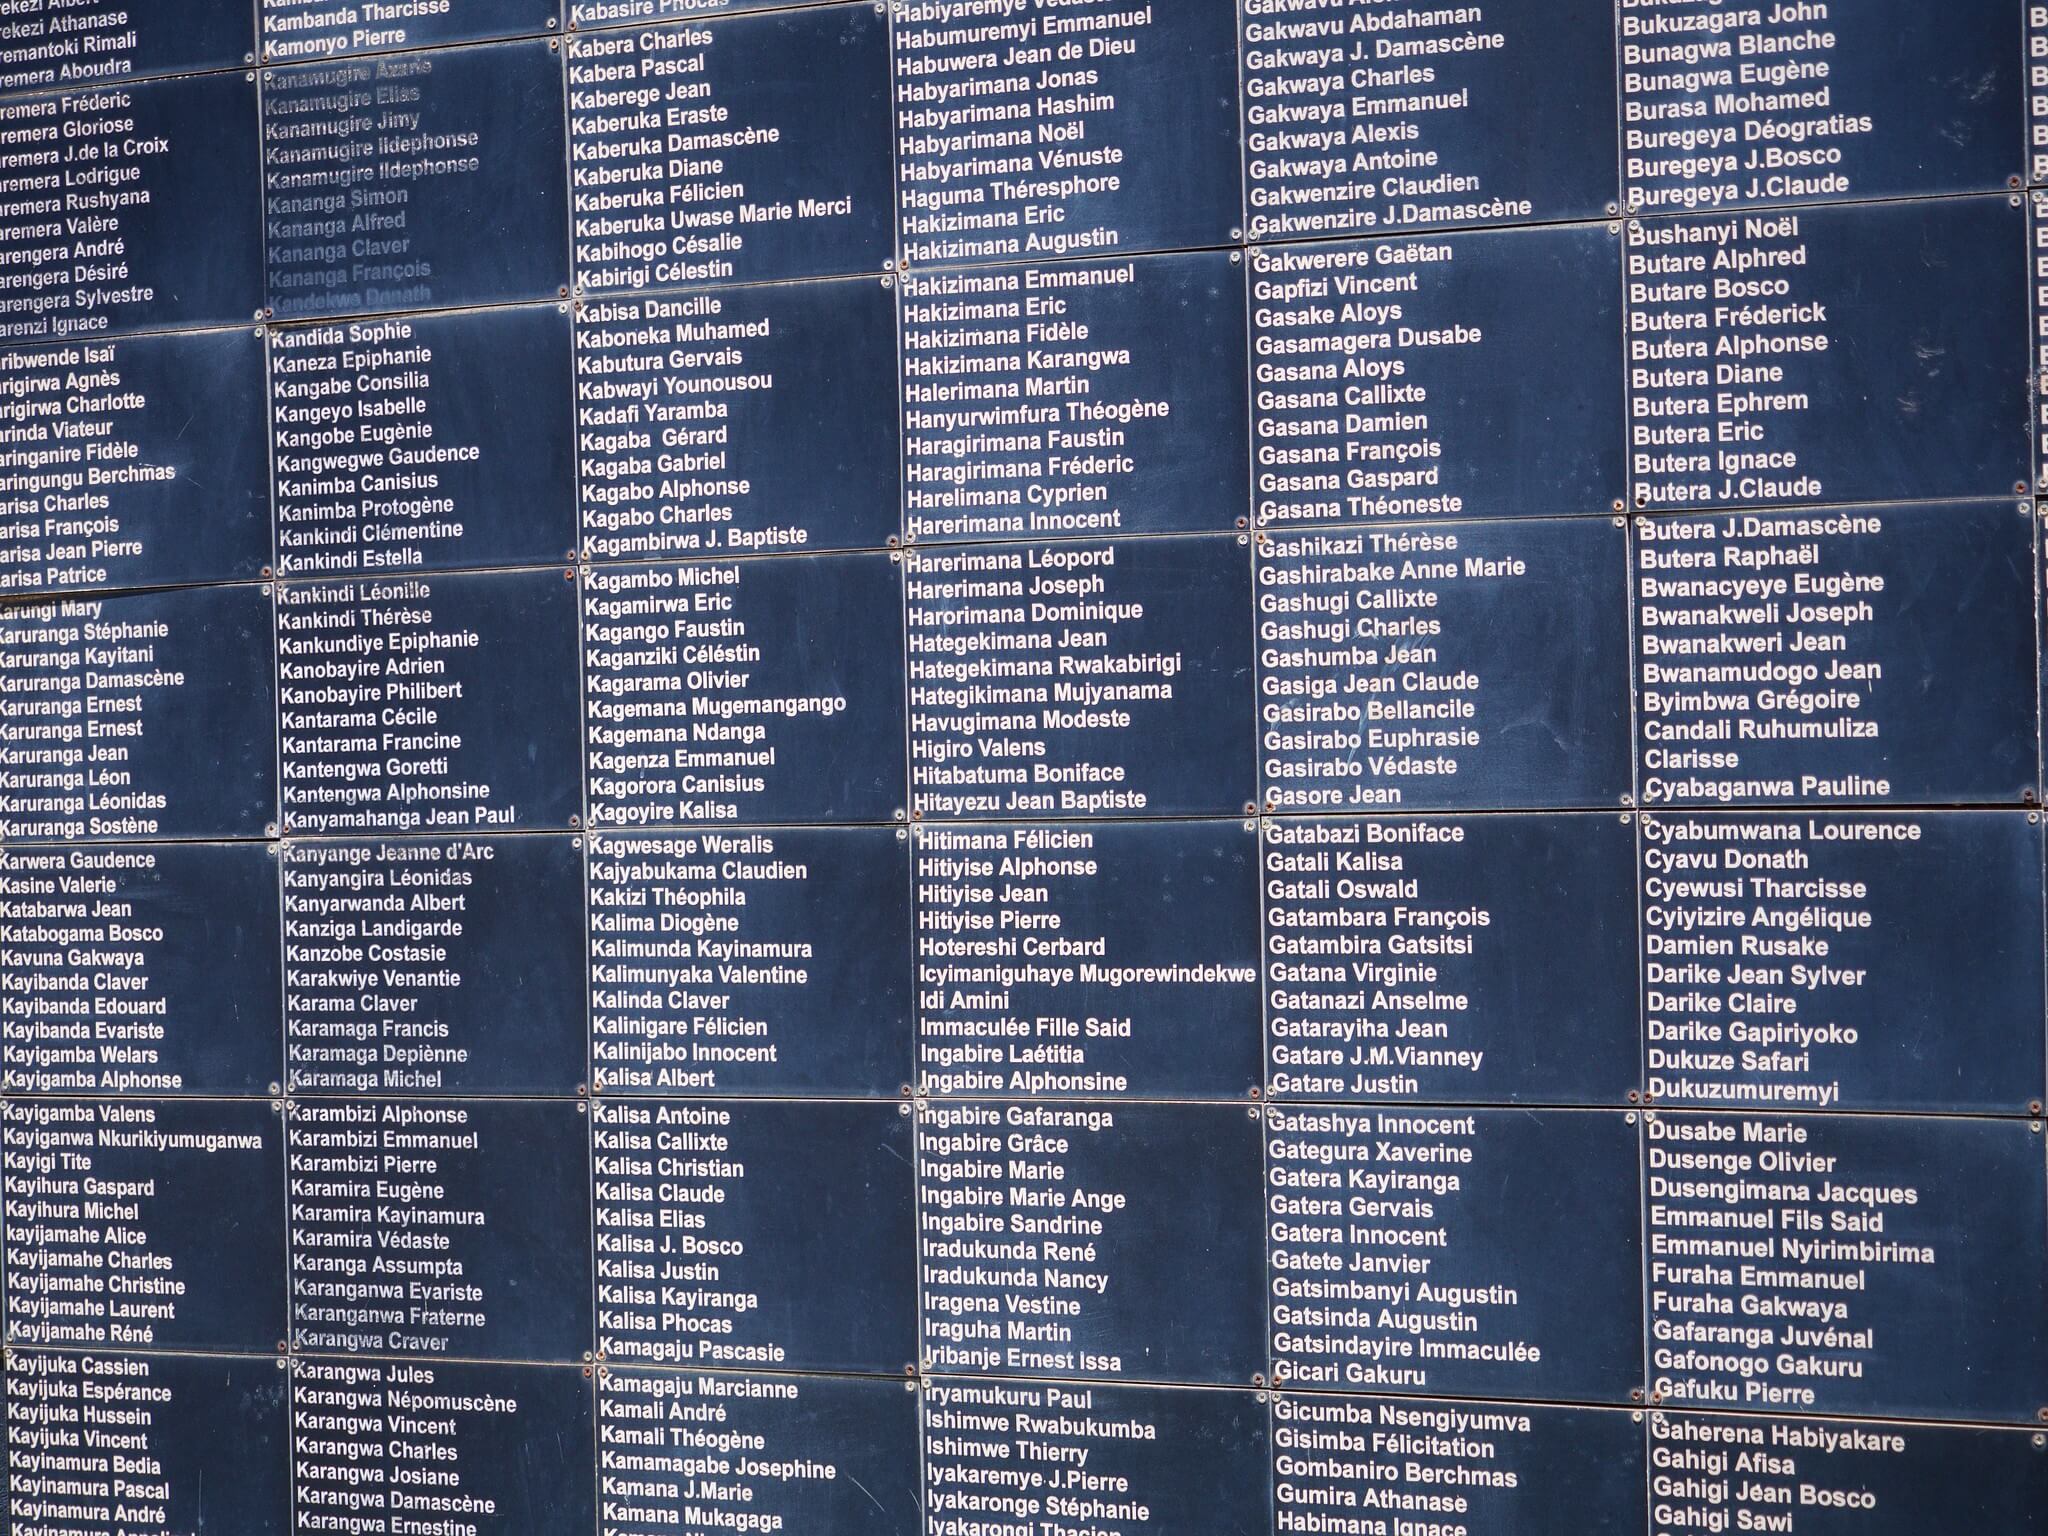 Kigali Genocide Memorial Wall of Names